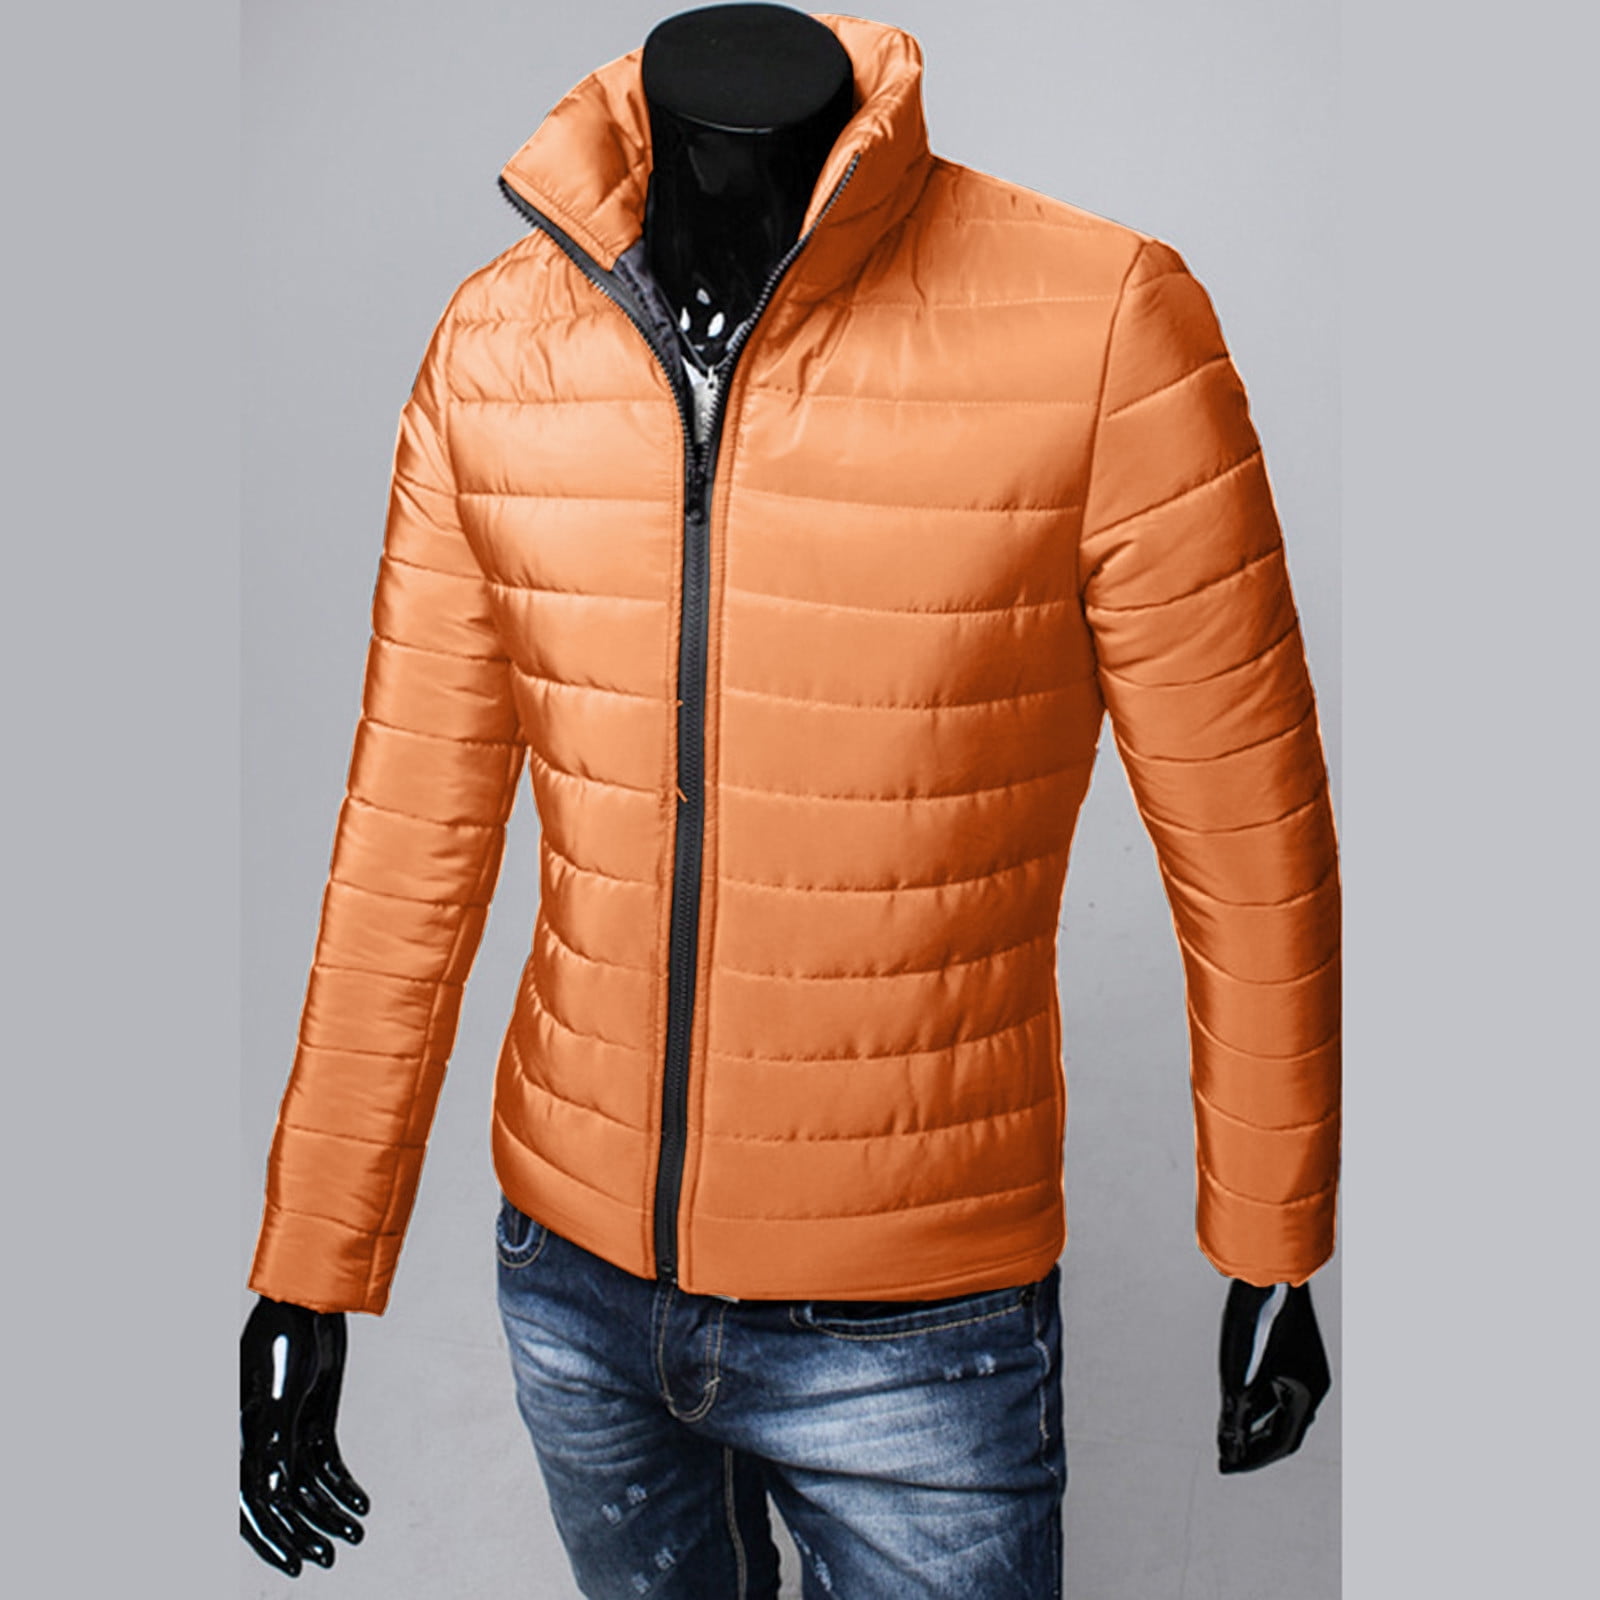 mens jacket price